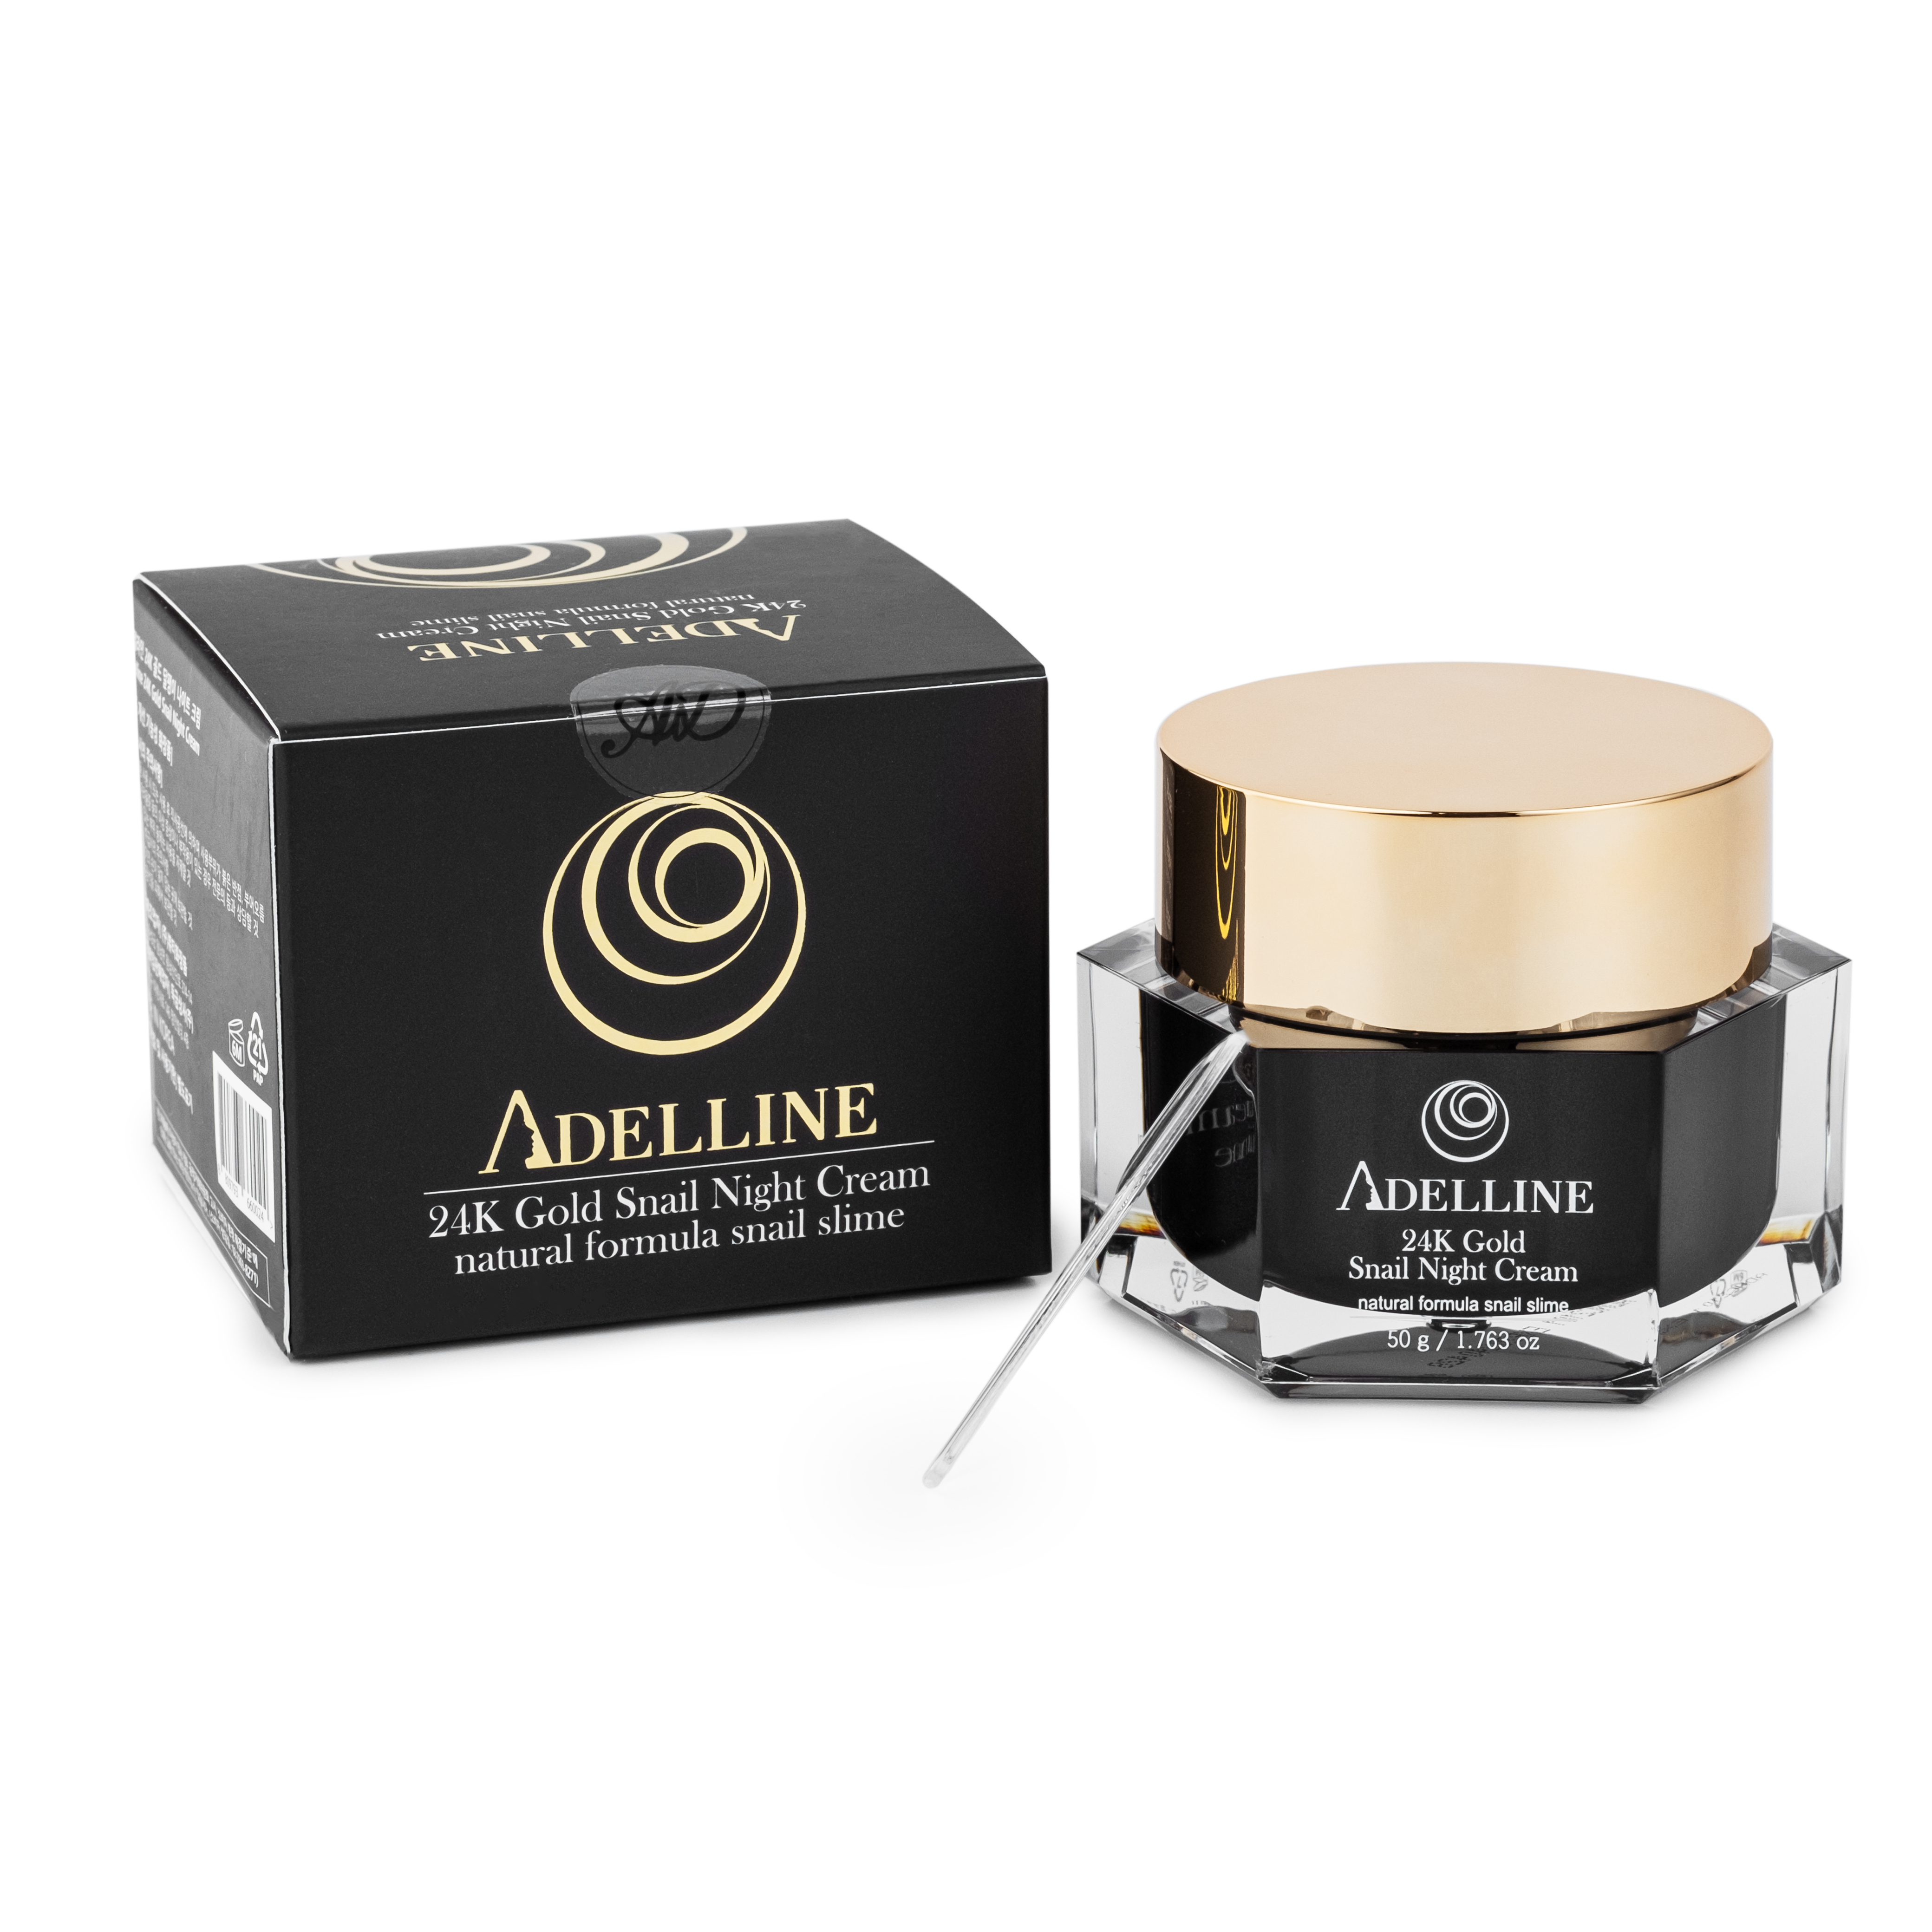 Adelline 24K Gold Snail Night Cream 50g